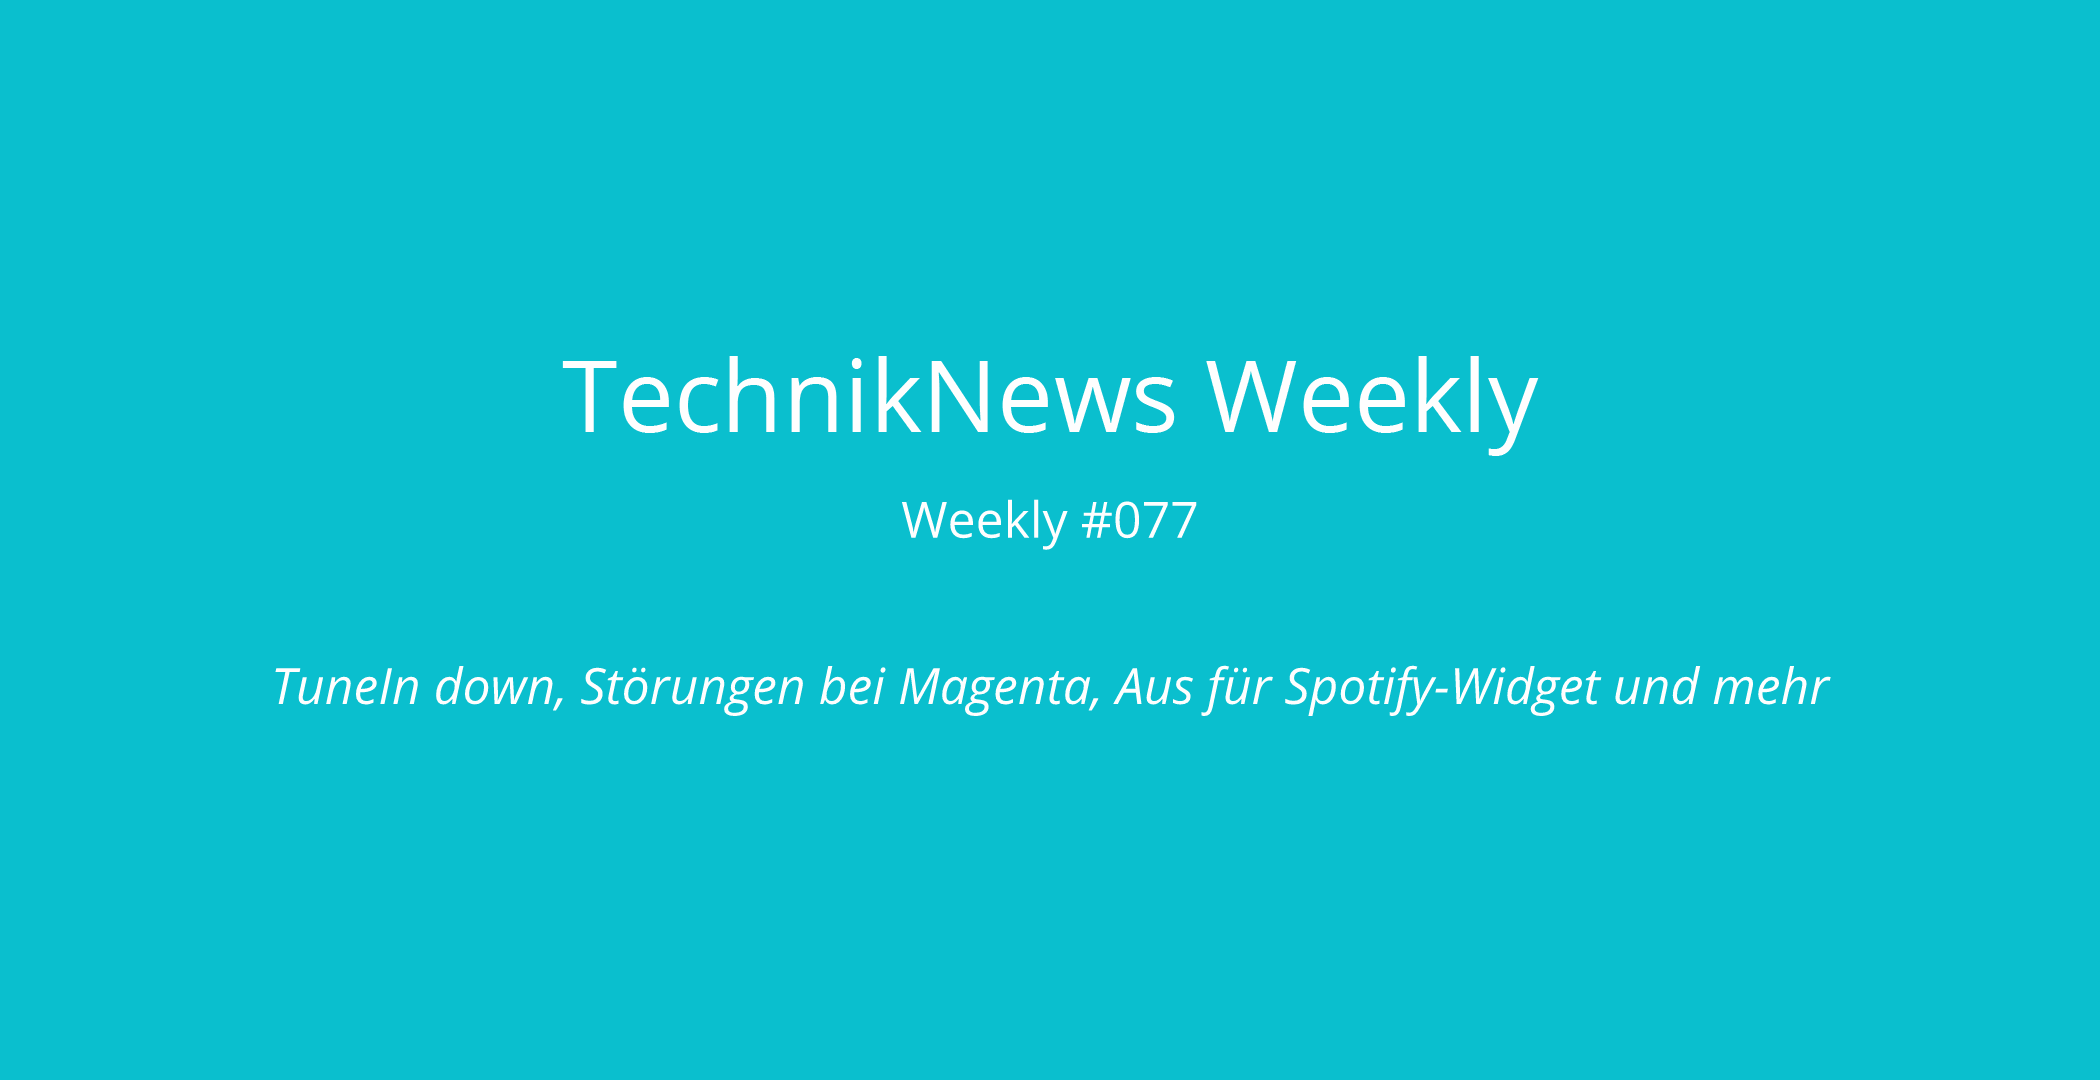 TechnikNews Weekly # 077